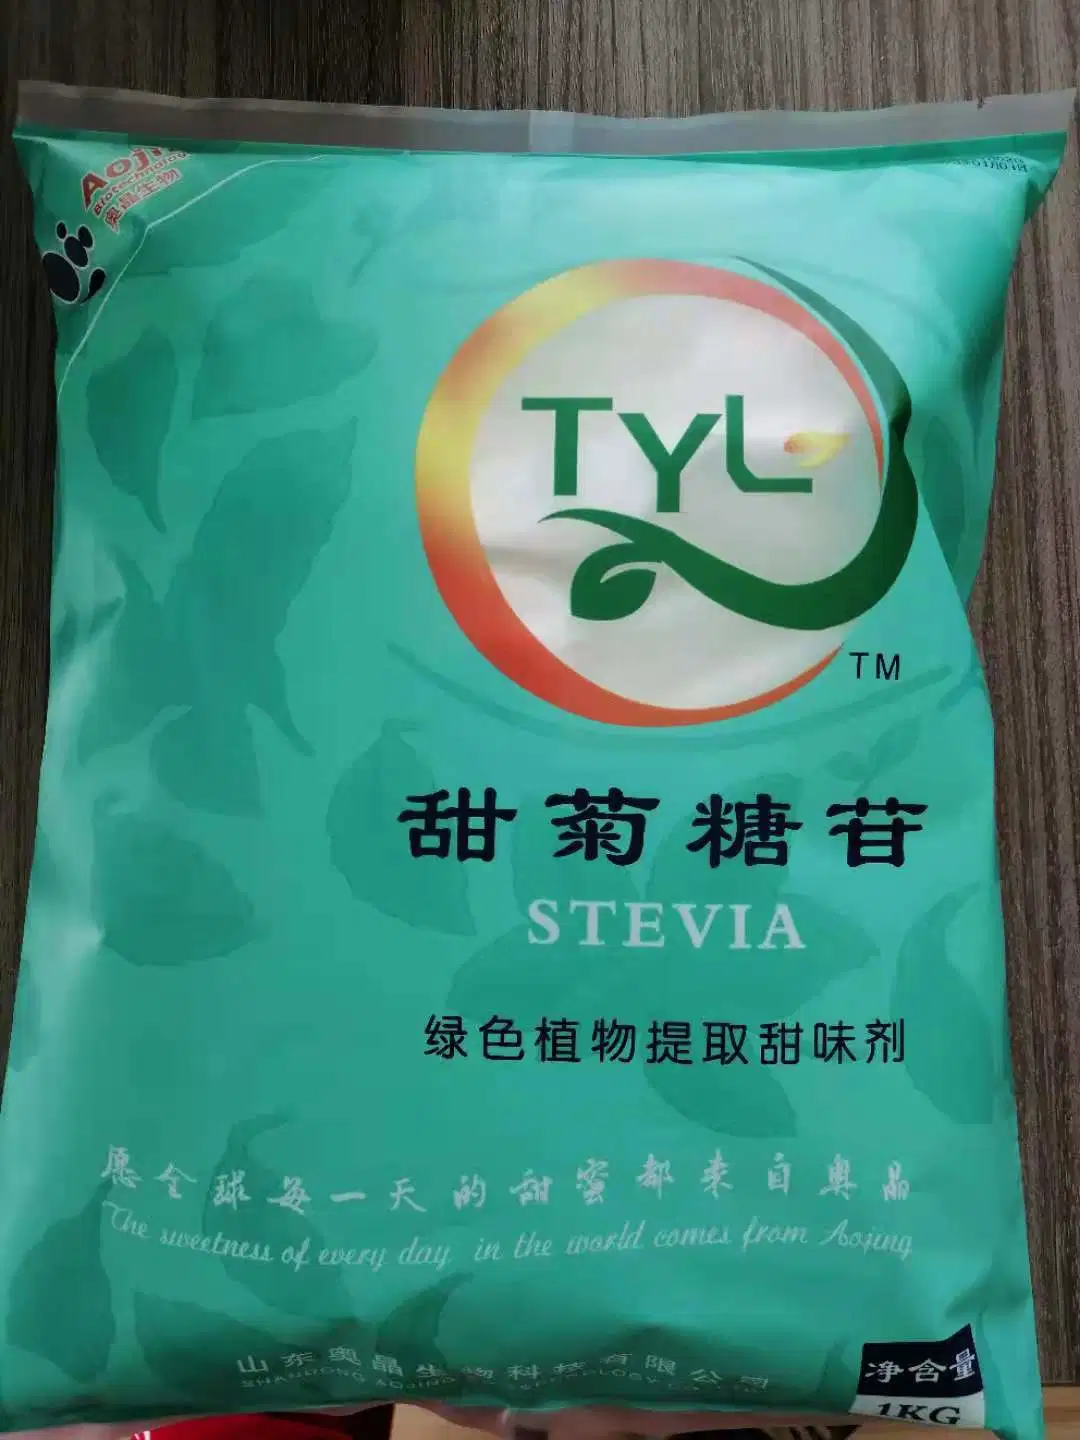 Aojing puro biológico extracto de stevia Edulcorante Natural aditivo alimentario GS95